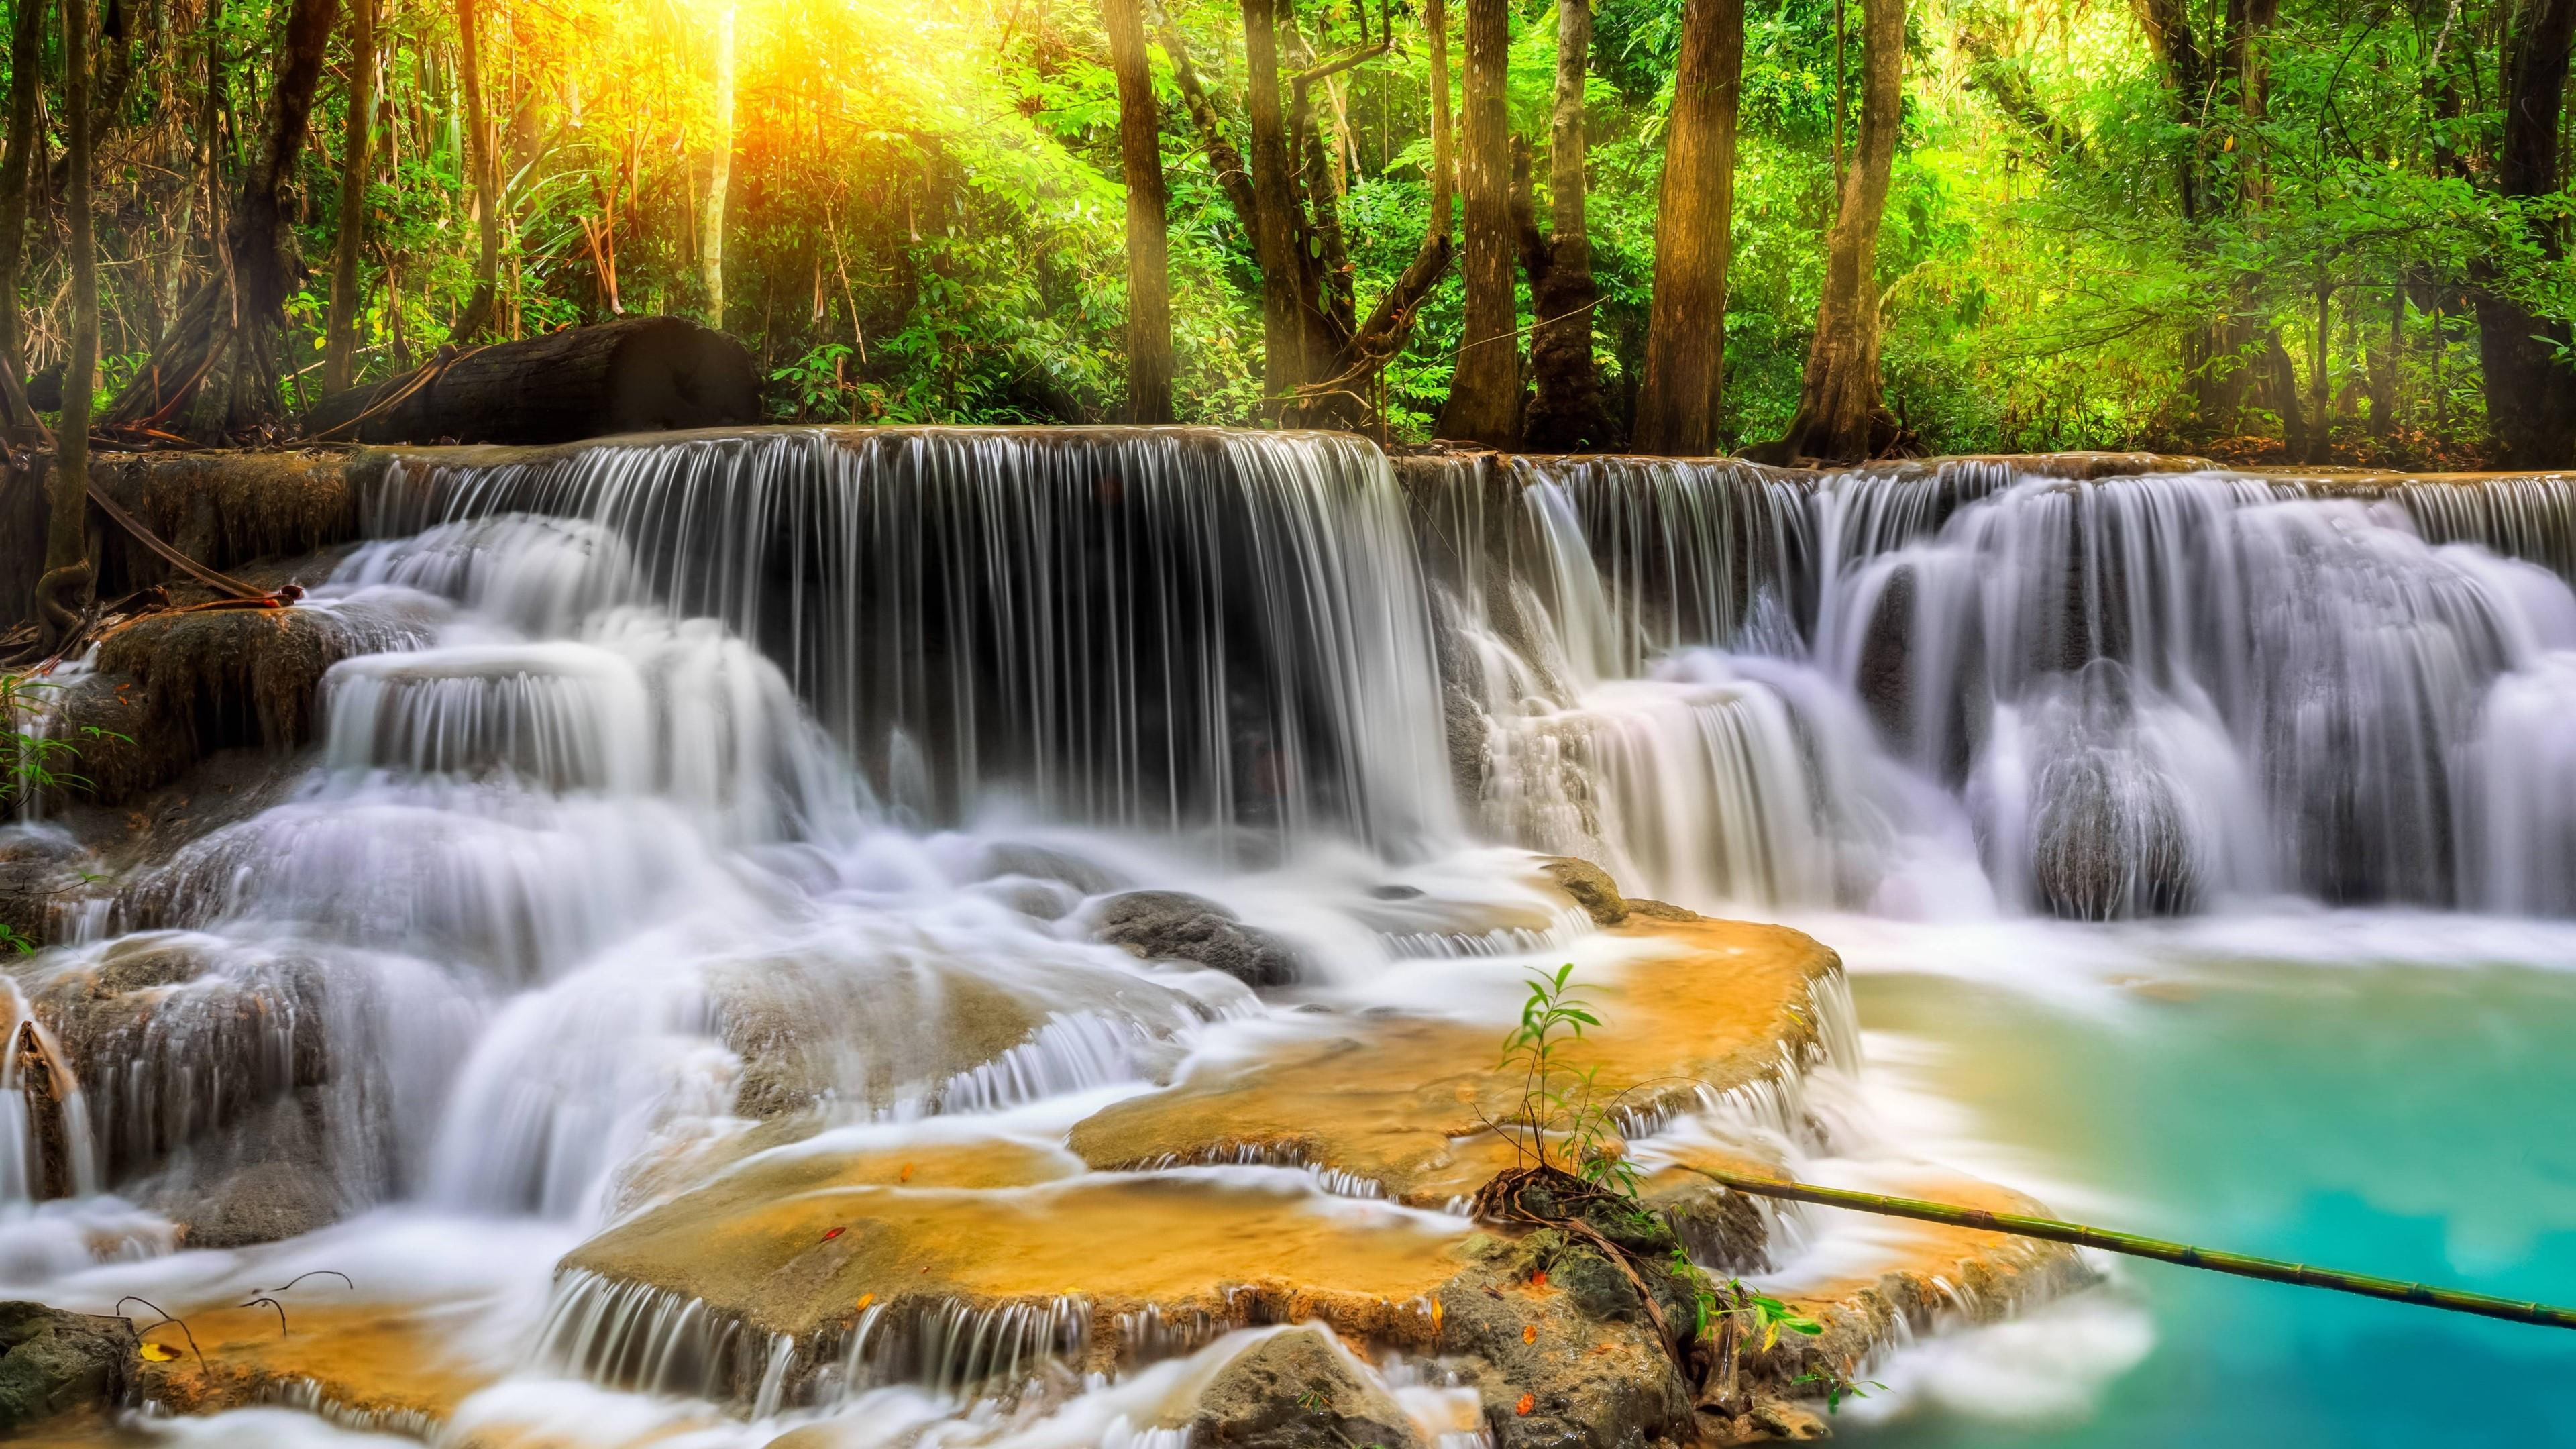 cascada, naturaleza, rio, selva, scenics - nature, waterfall